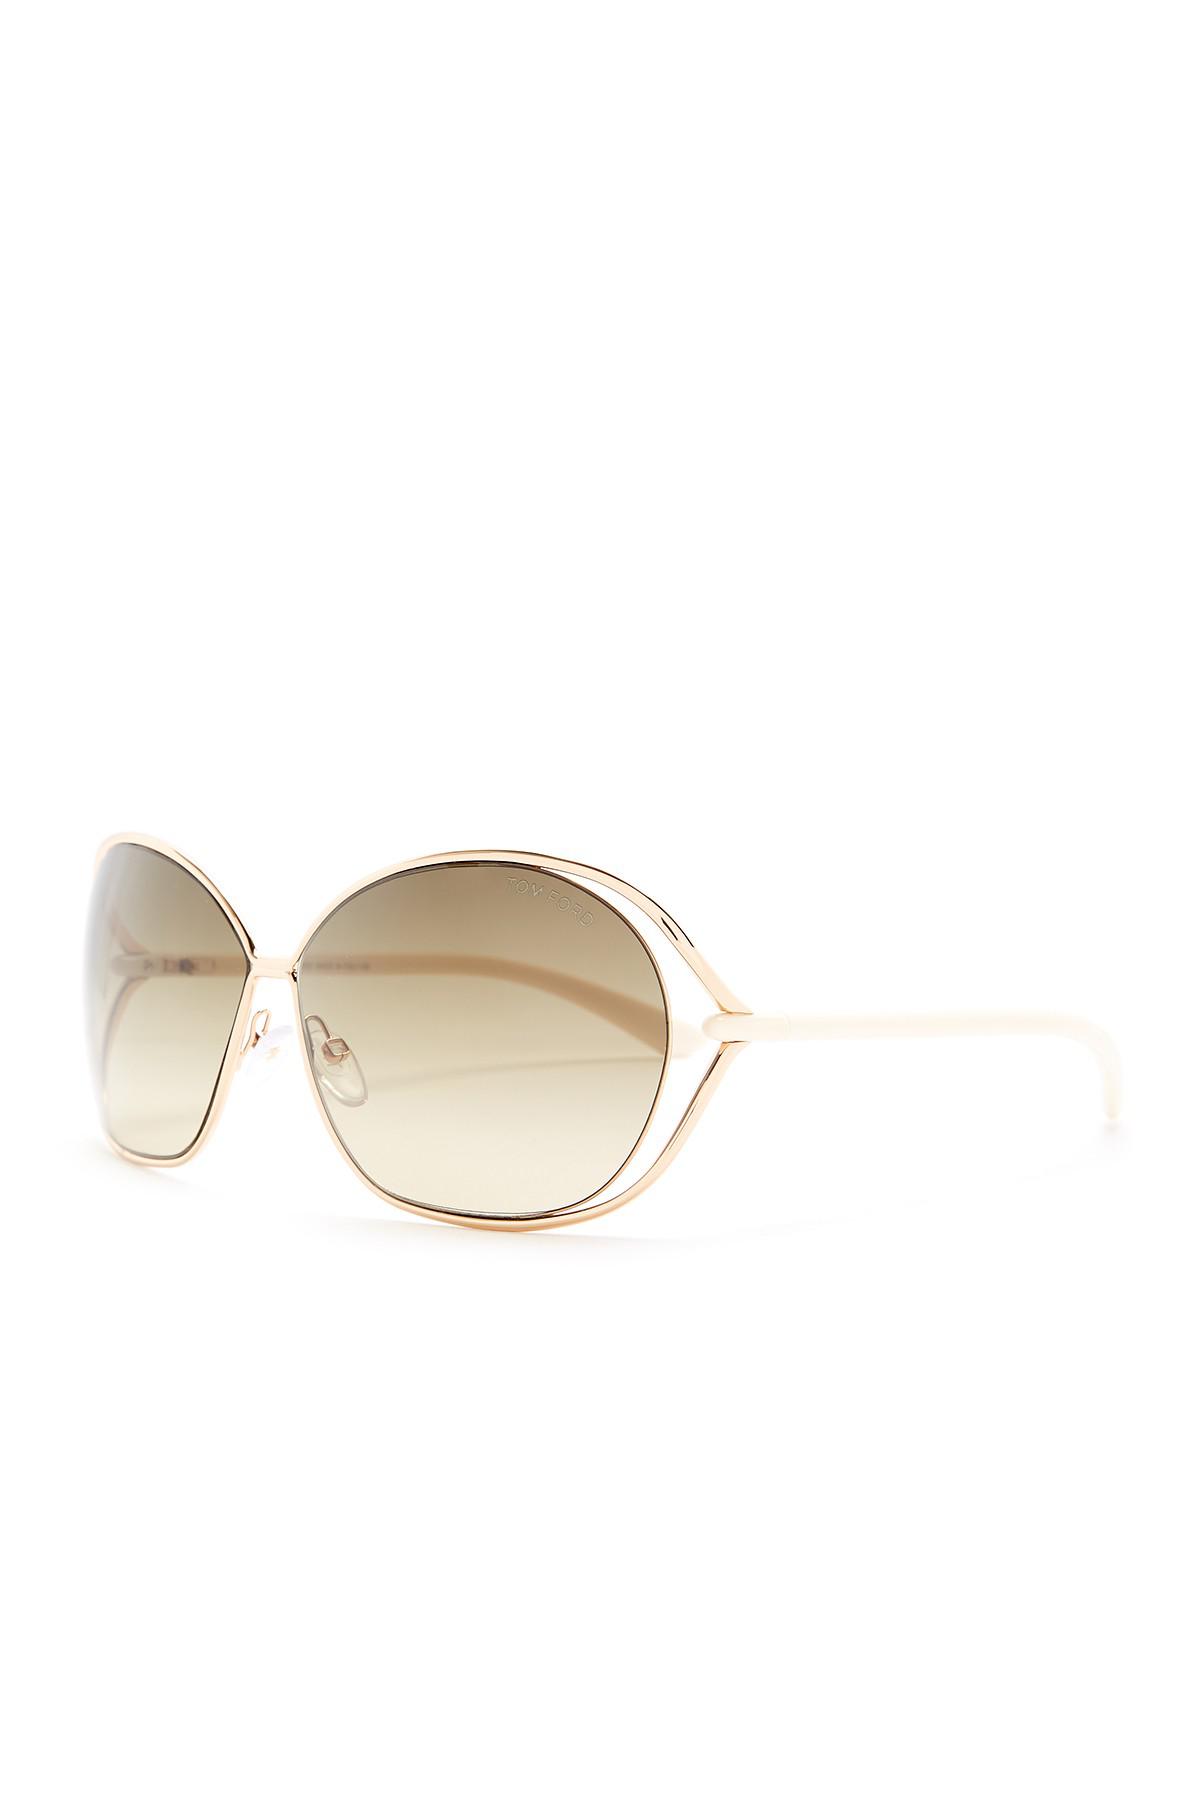 Tom Ford Women's Carla 66mm Oversized Round Metal Sunglasses - Lyst